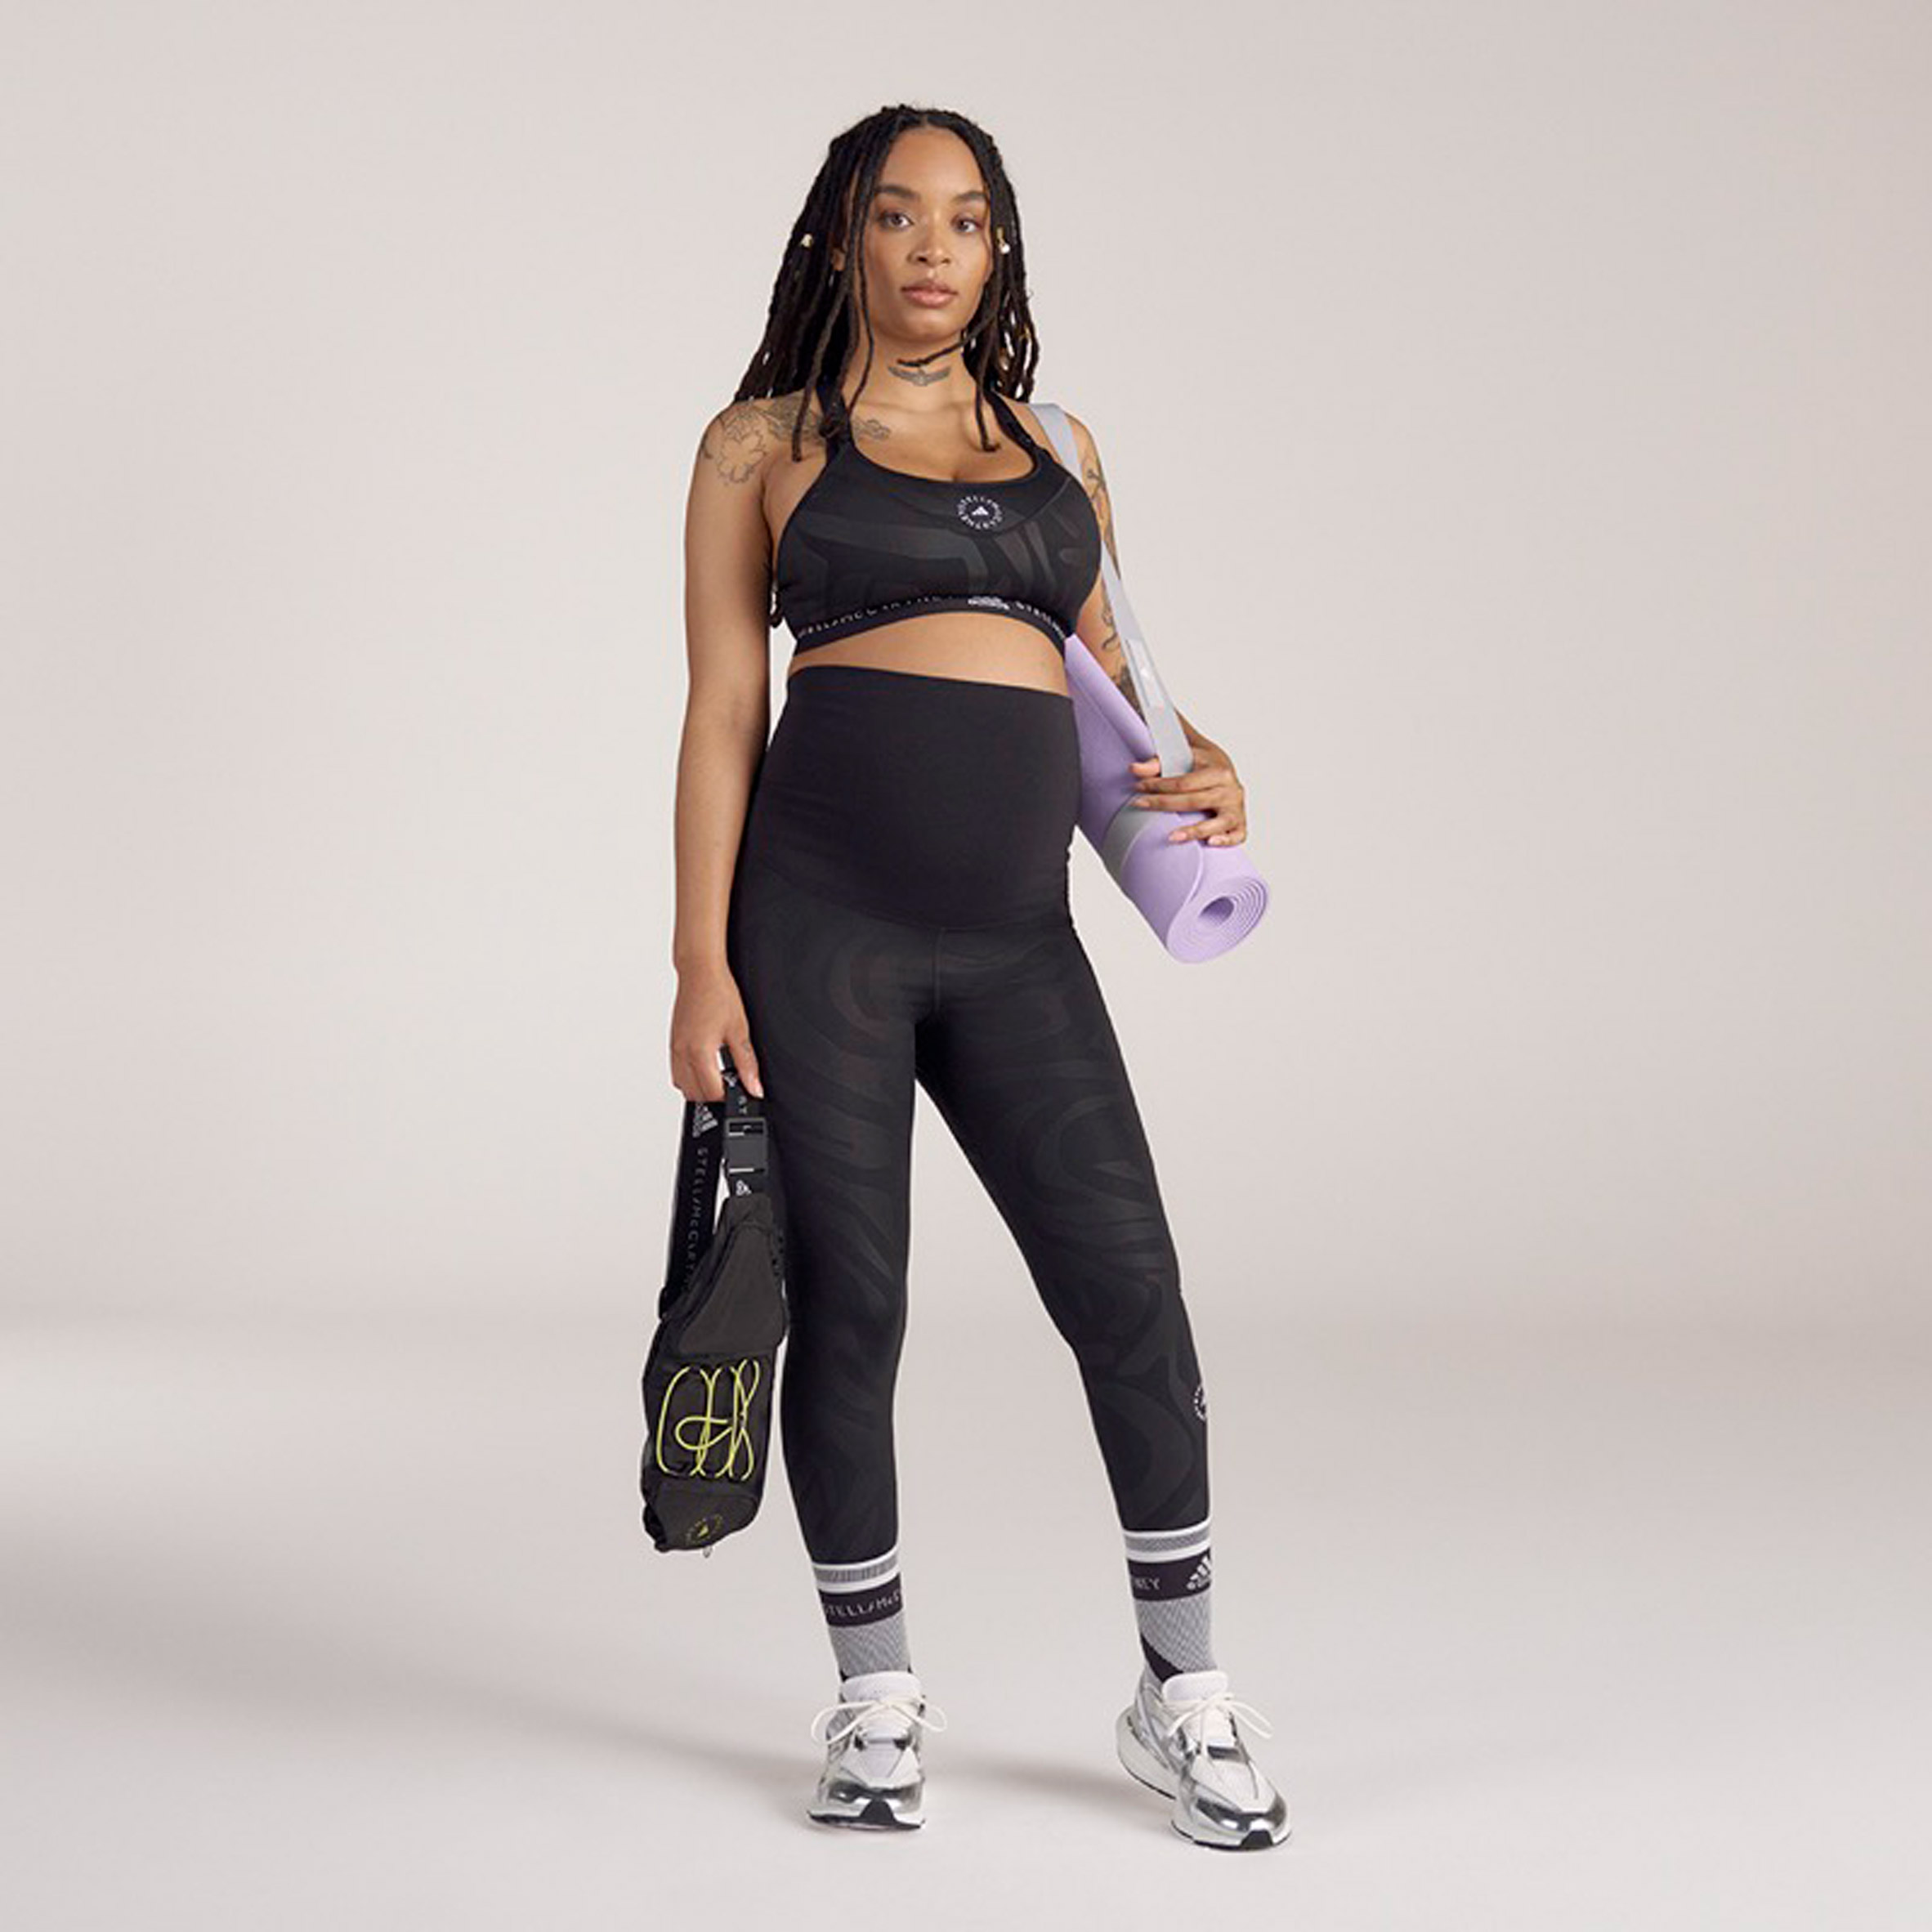 Adidas Plastic Sports Bras for Women